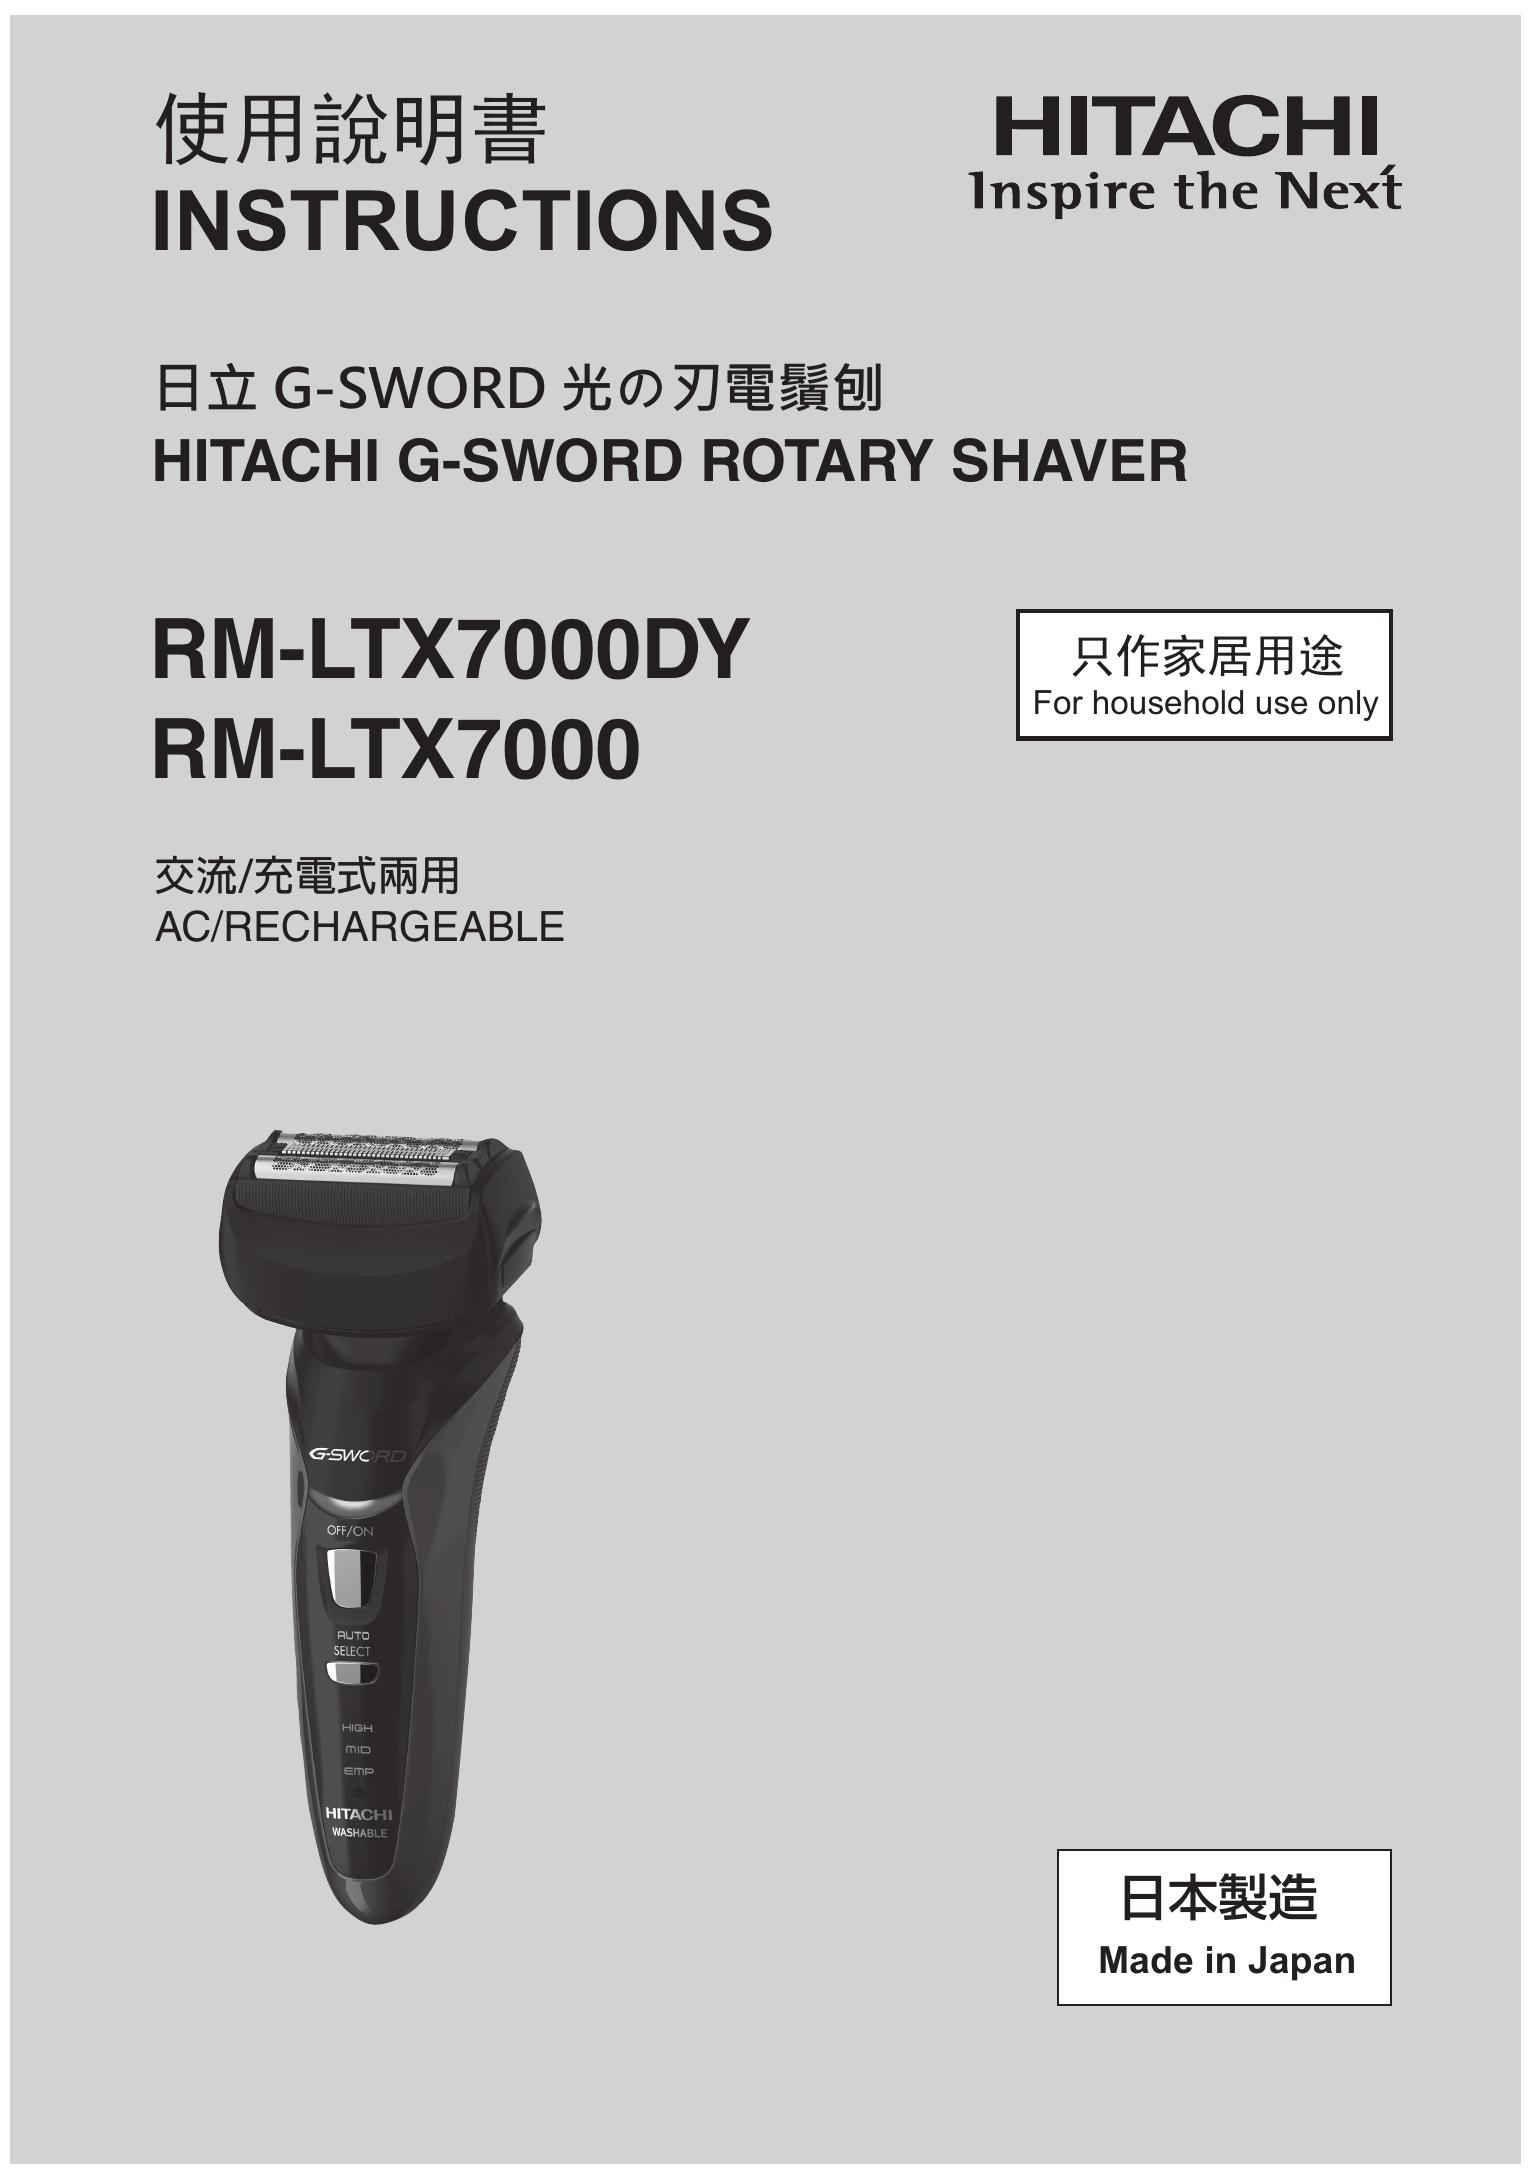 Hitachi rm-ltx7000 Electric Shaver User Manual